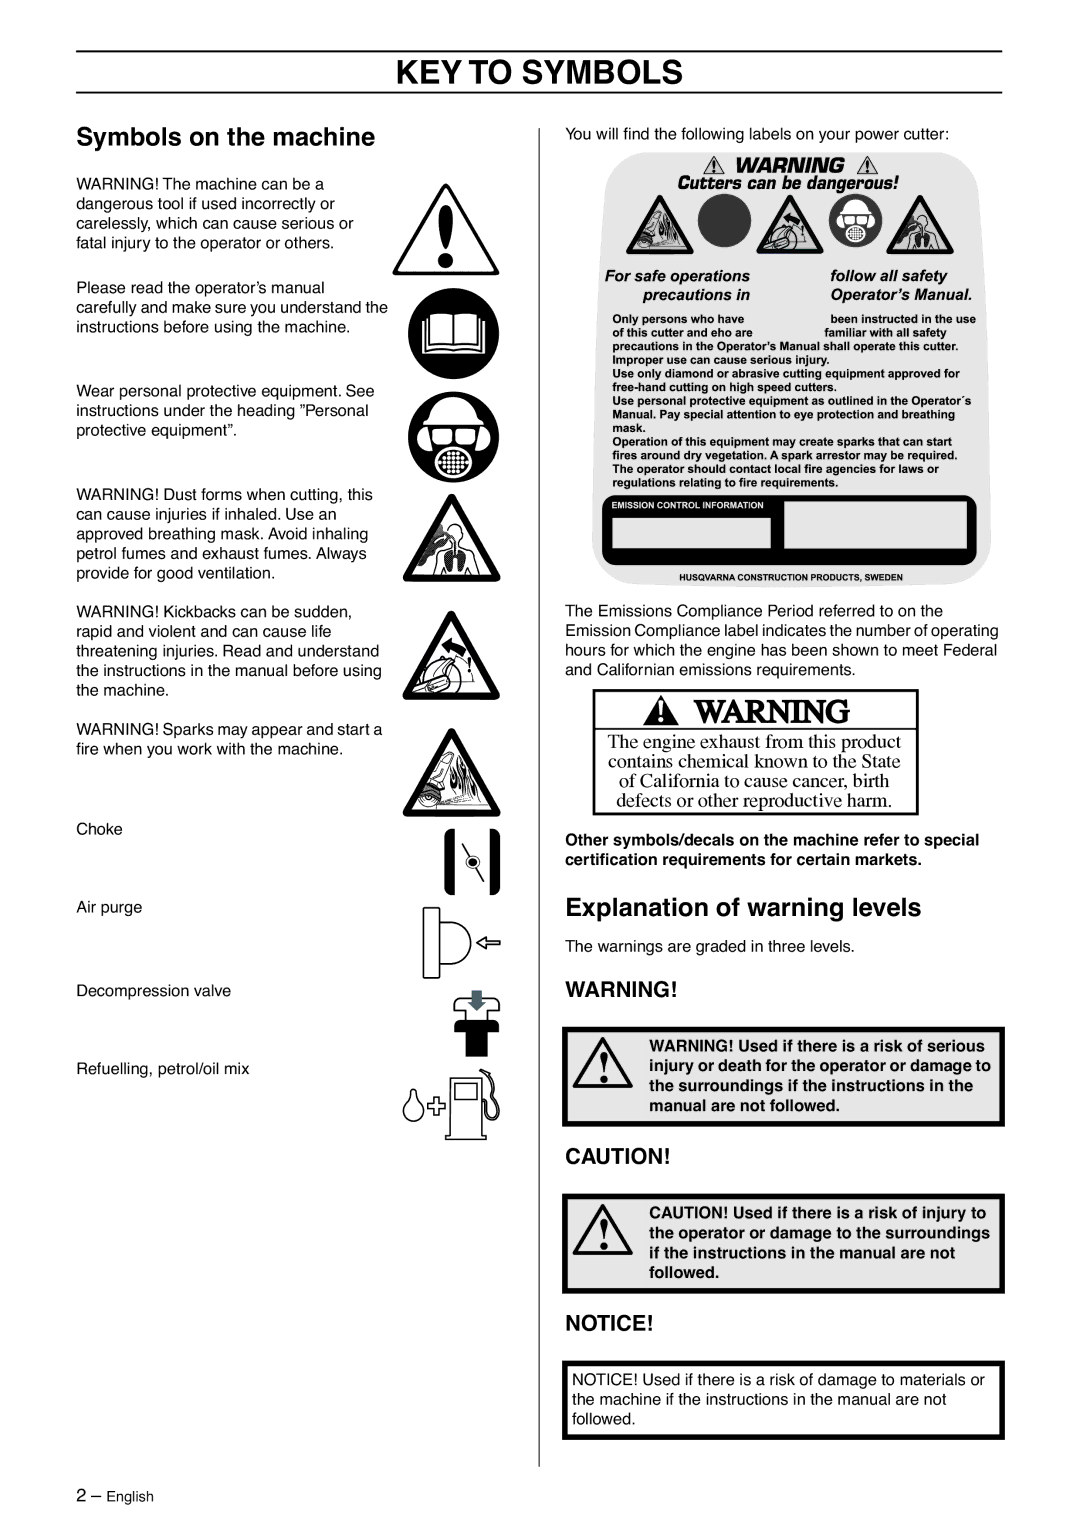 Husqvarna K970 manual KEY to Symbols, Symbols on the machine, Explanation of warning levels 